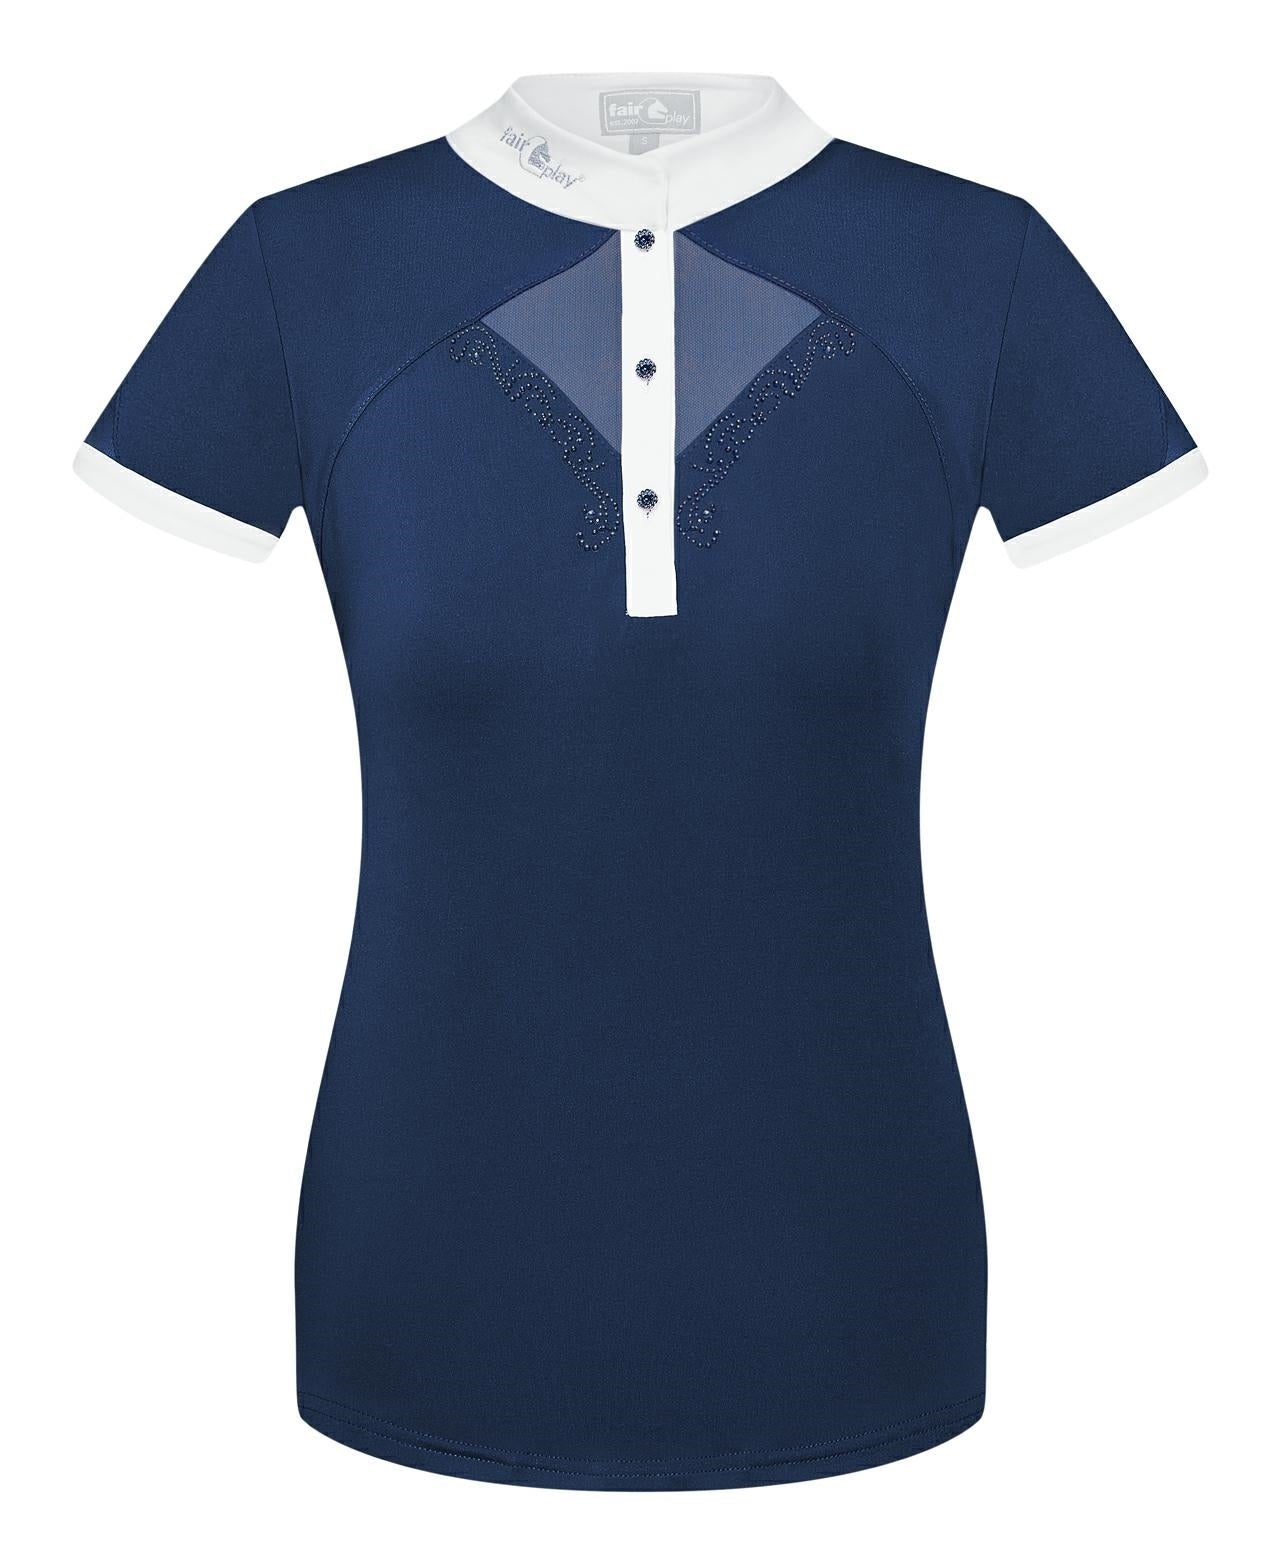 Fairplay Cathrine Short Sleeve Competition Shirt